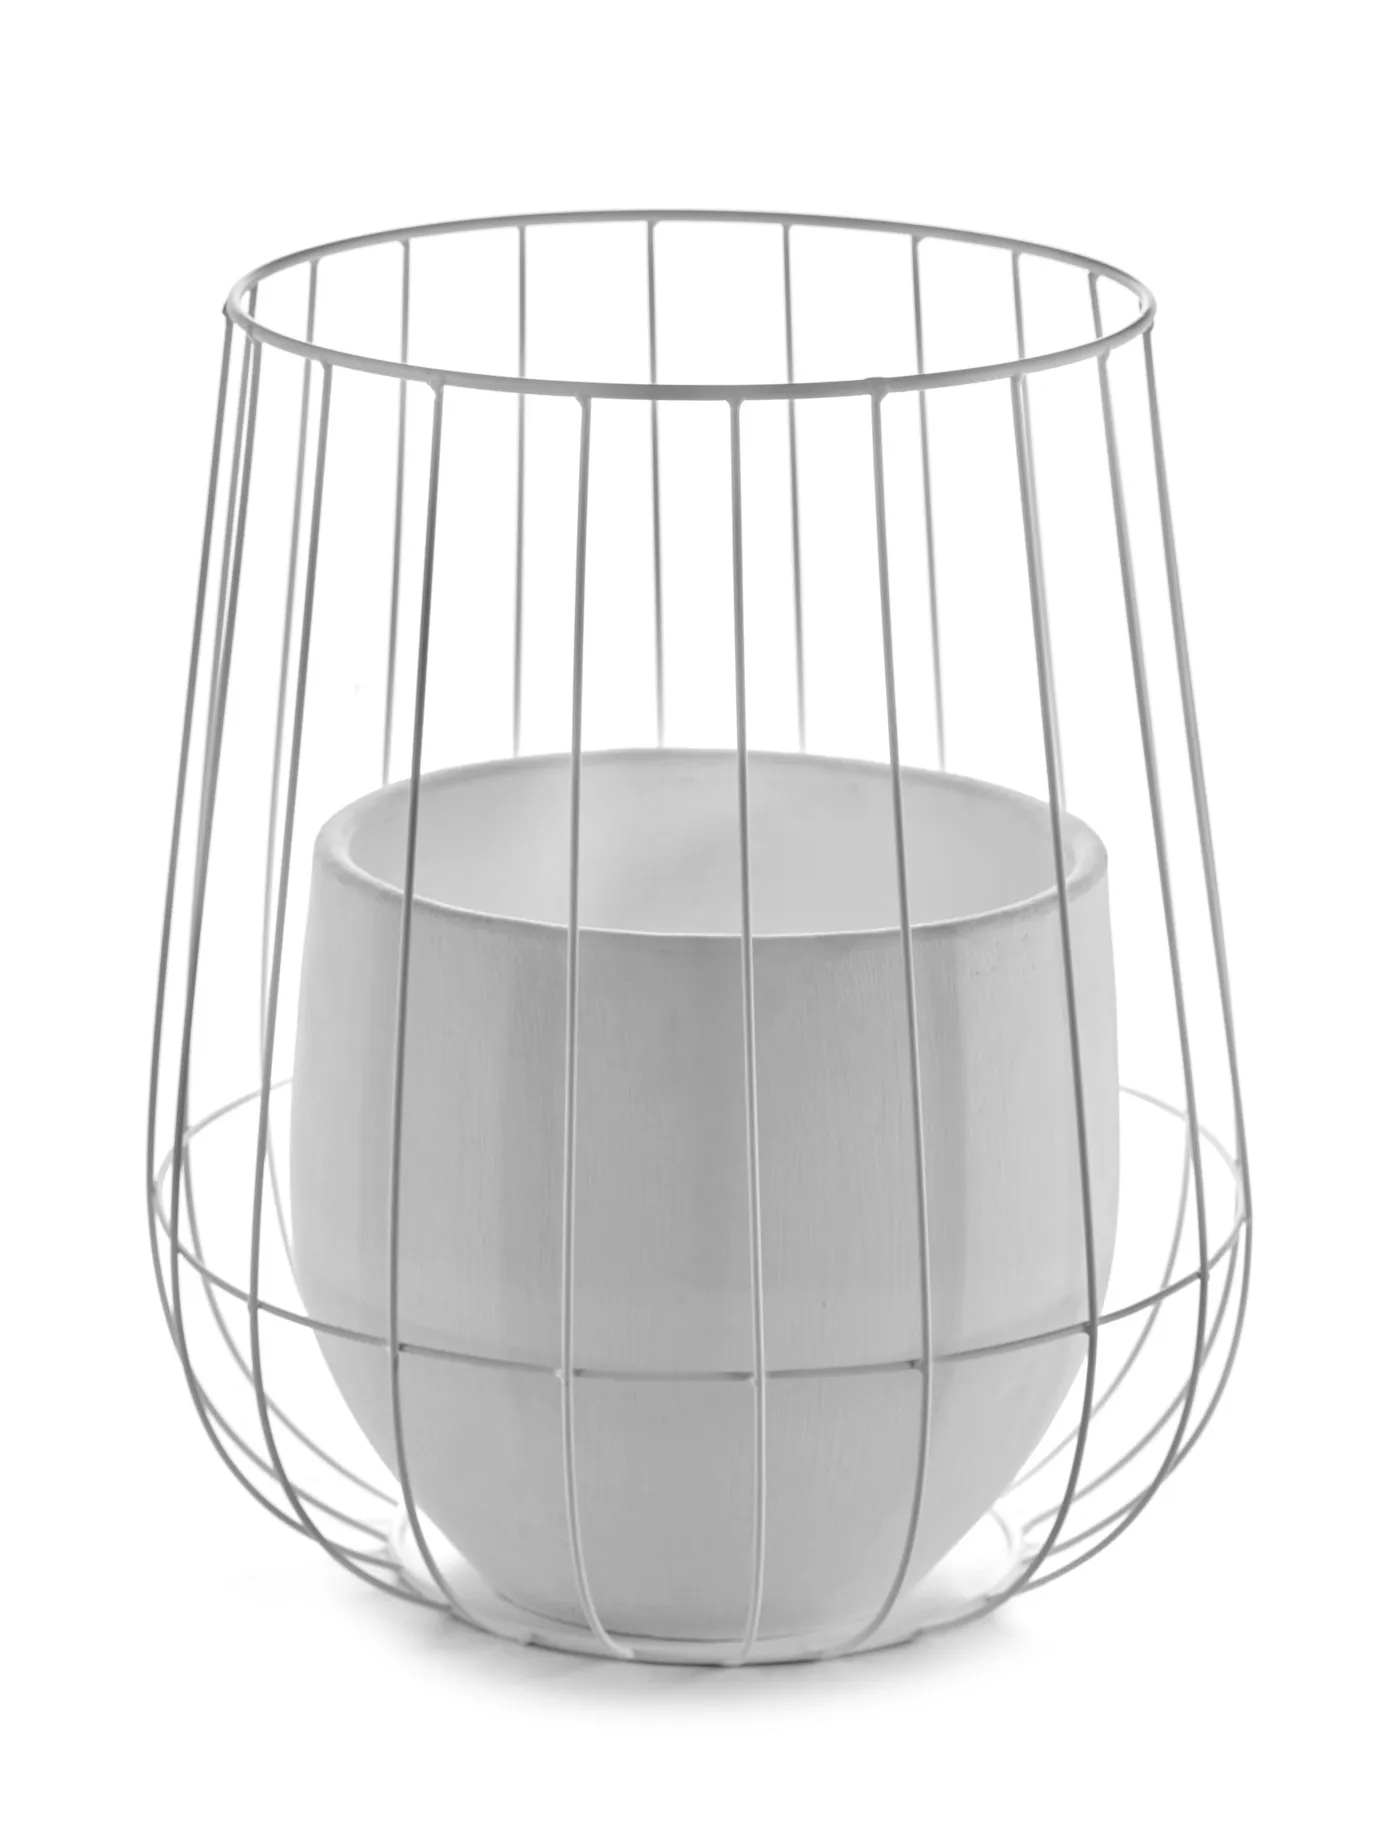 Pot In A Cage White Serax